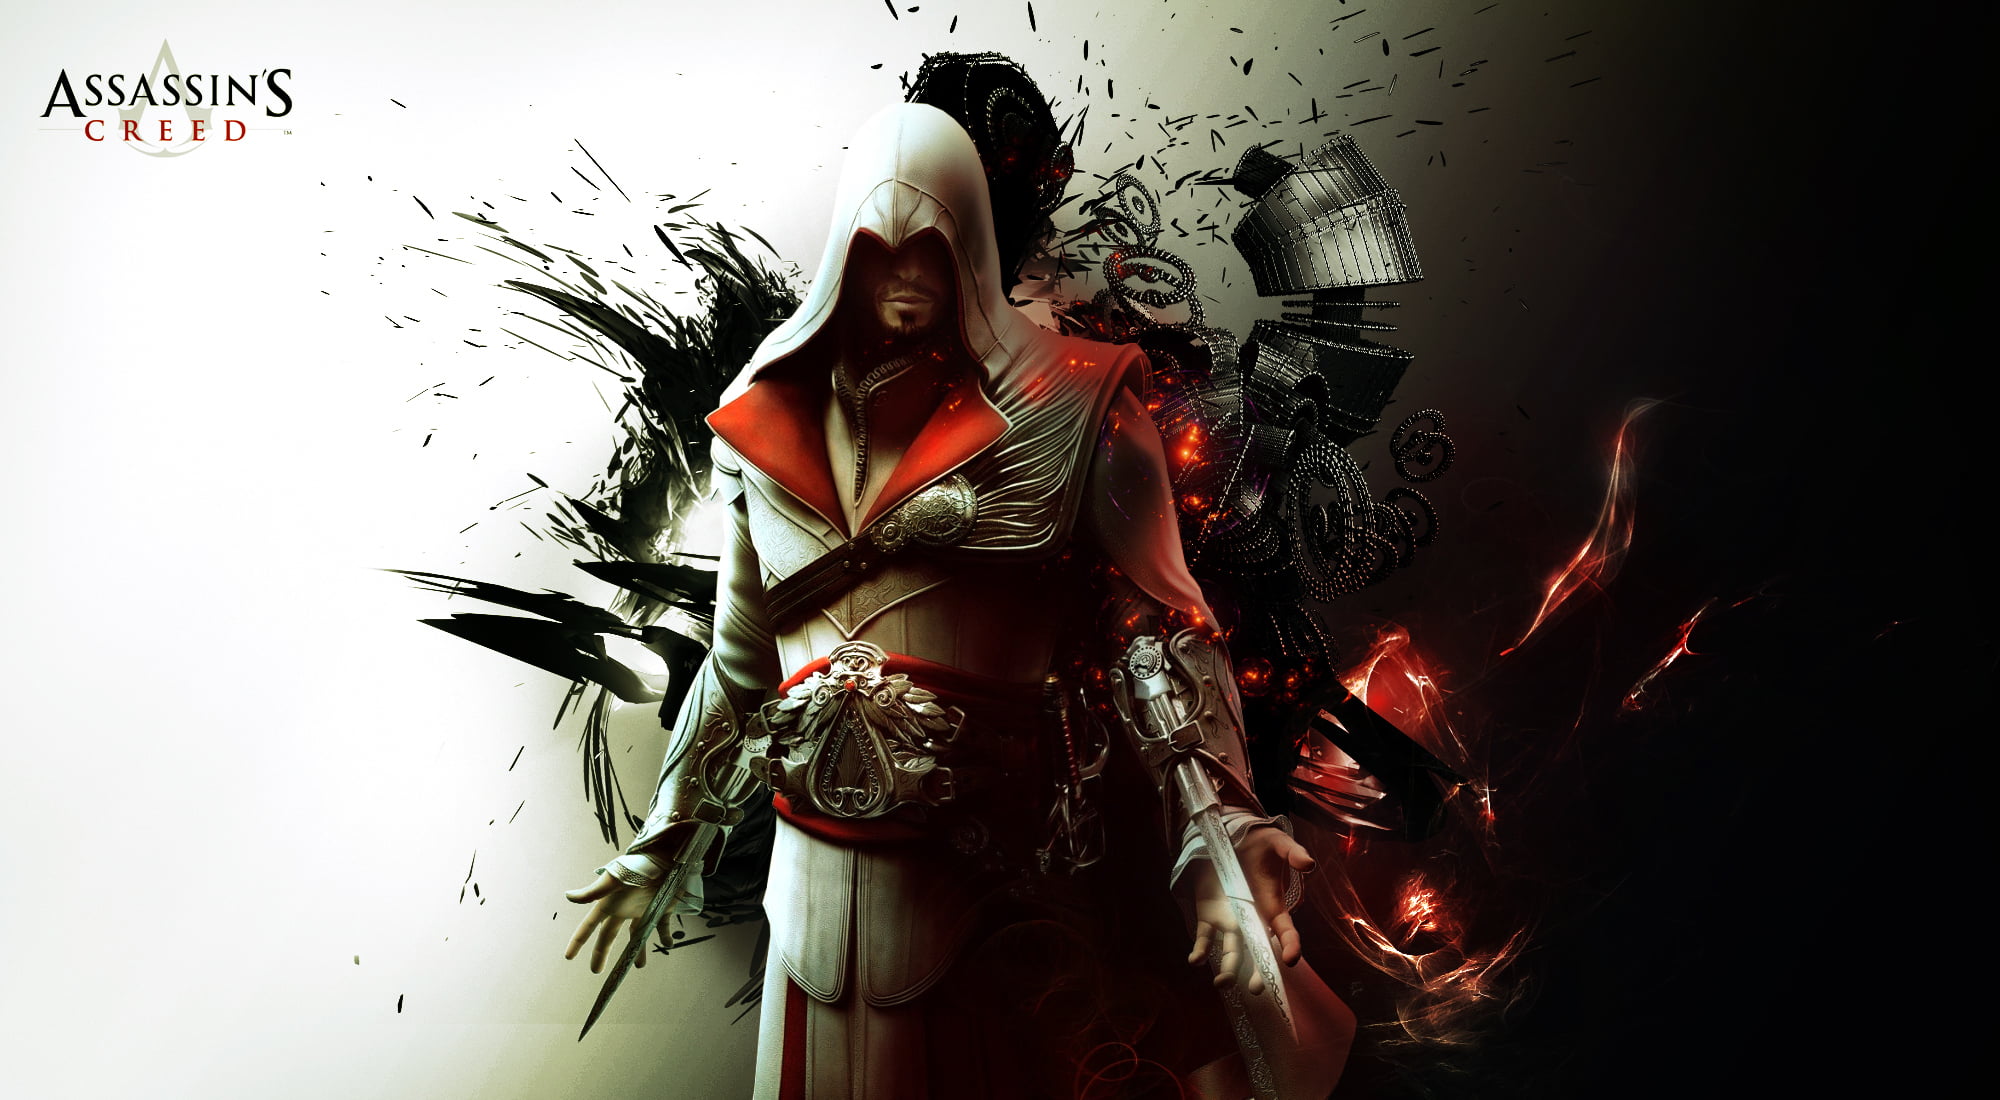 Assassins Creed Ezio digital wallpaper, abstract, killer, fon